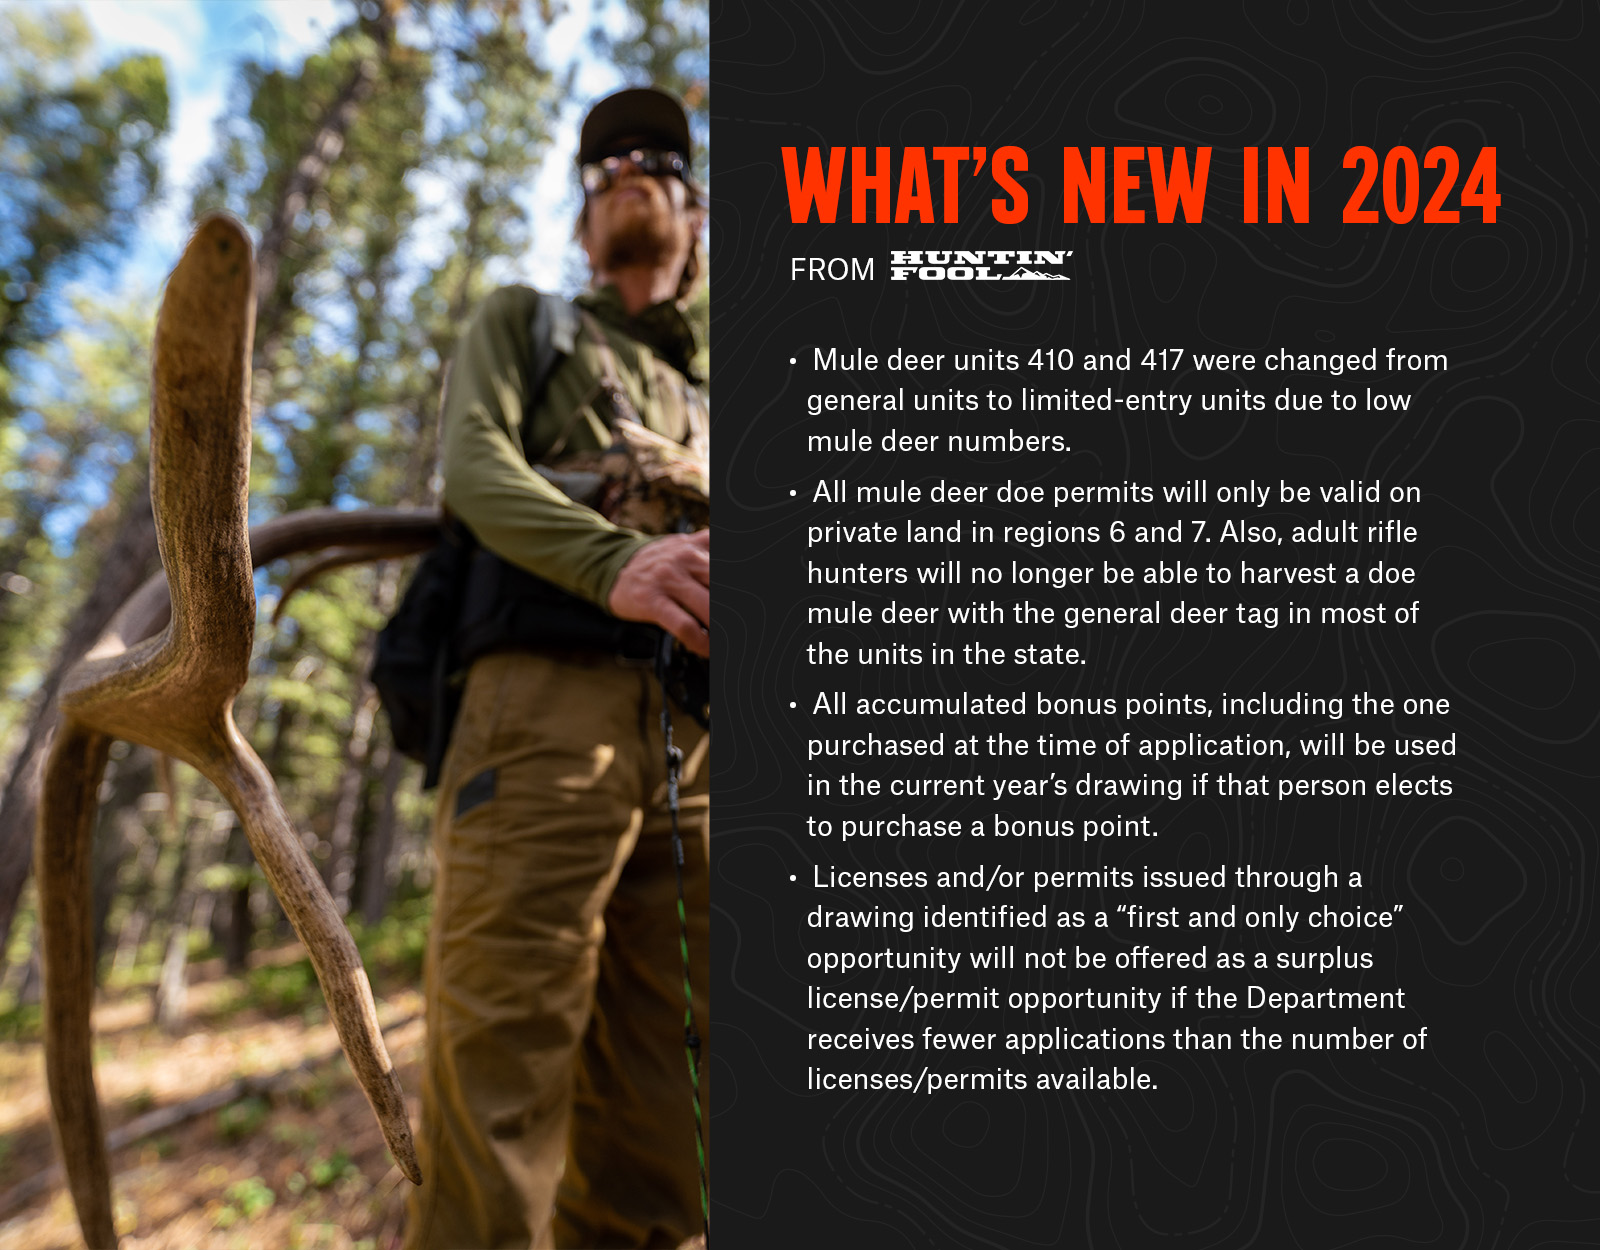 Infographic explaining new regulations for Montana's upcoming hunting season.